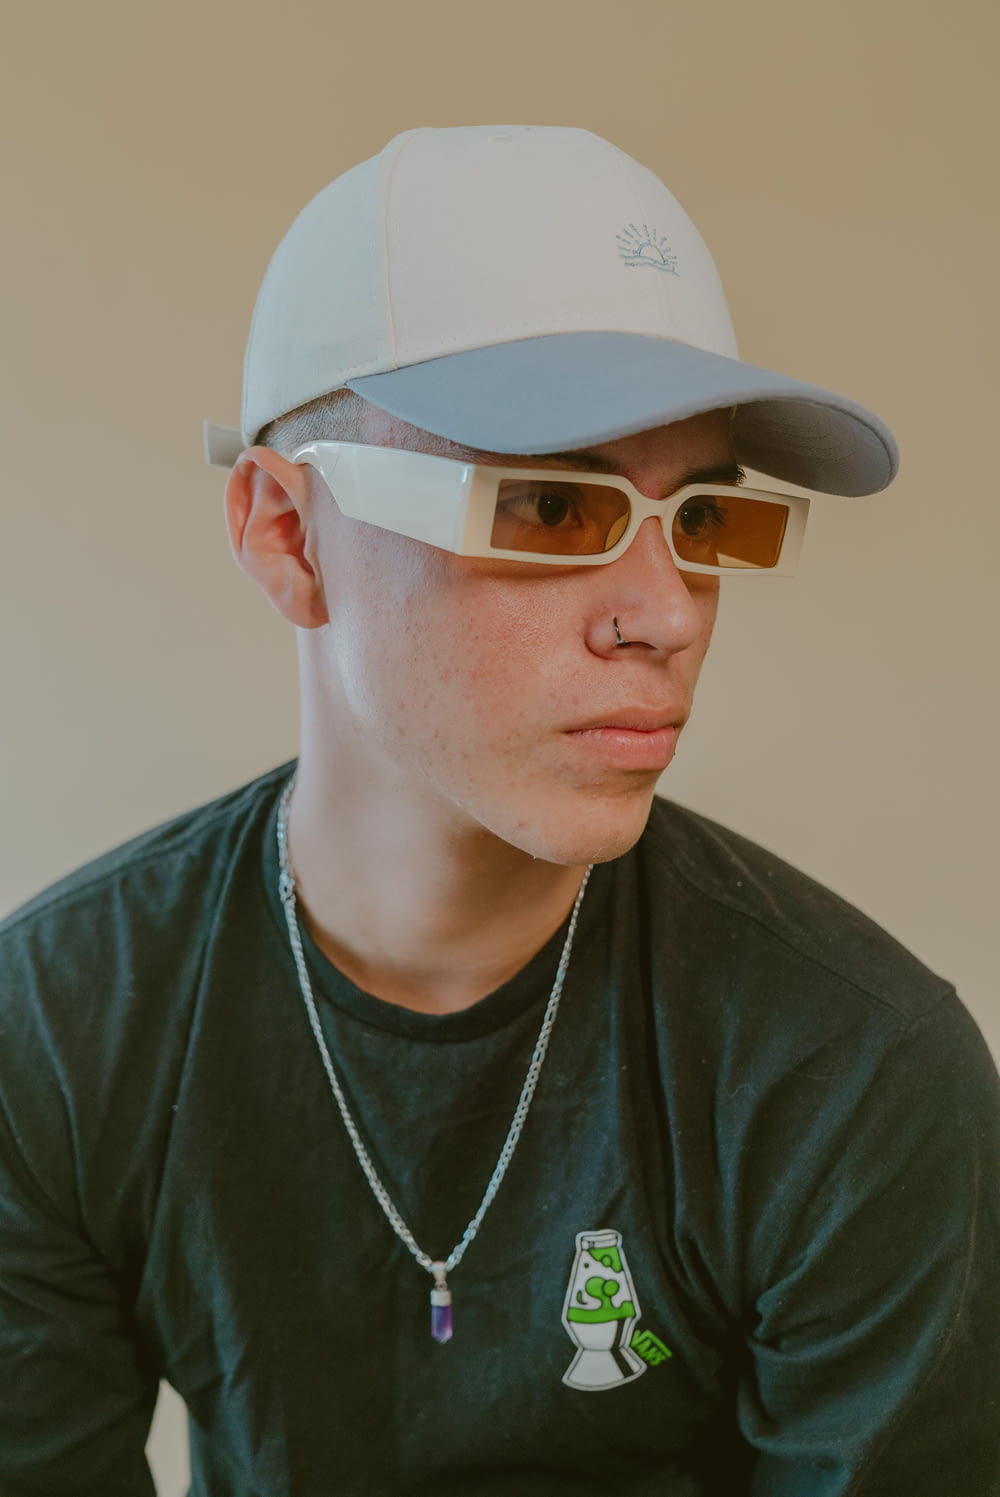 a man wearing a baseball cap and sunglasses